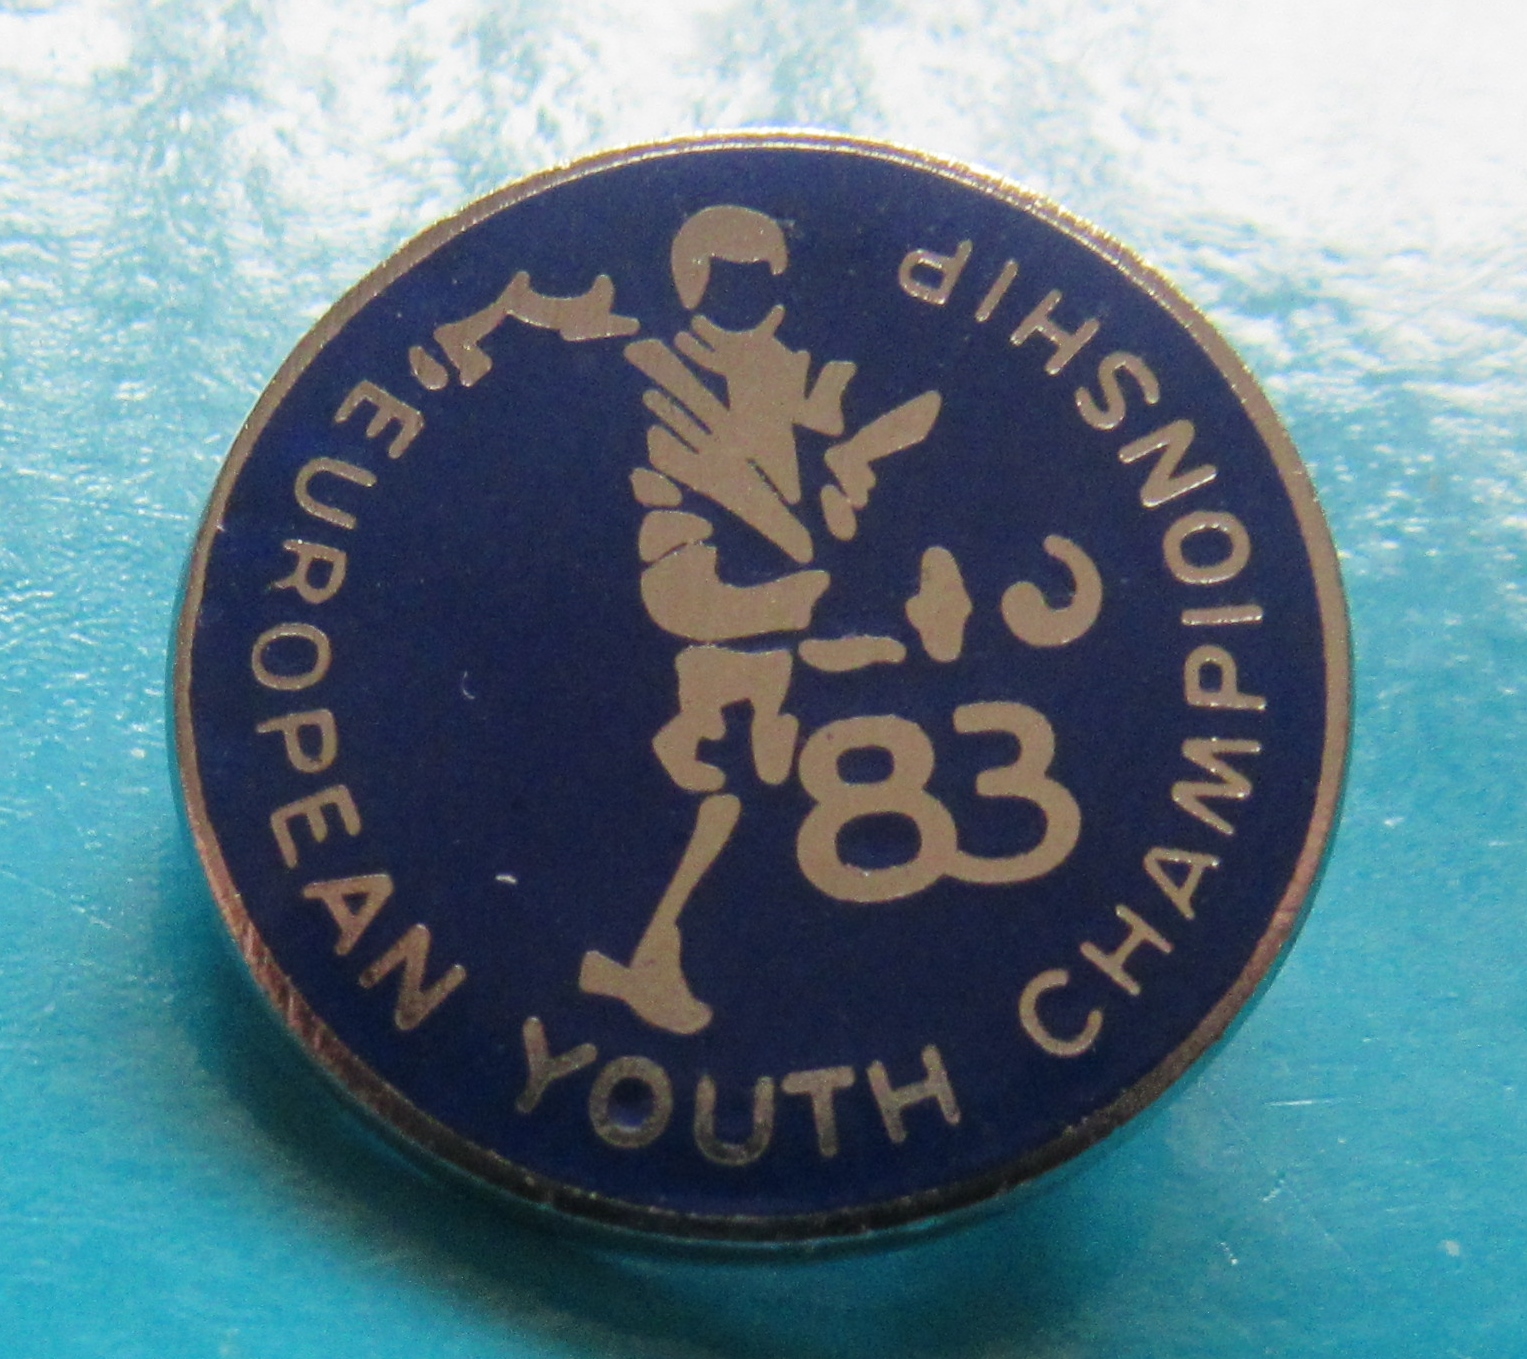 1983 EUROPEAN YOUTH CHAMPIONSHIP BADGE